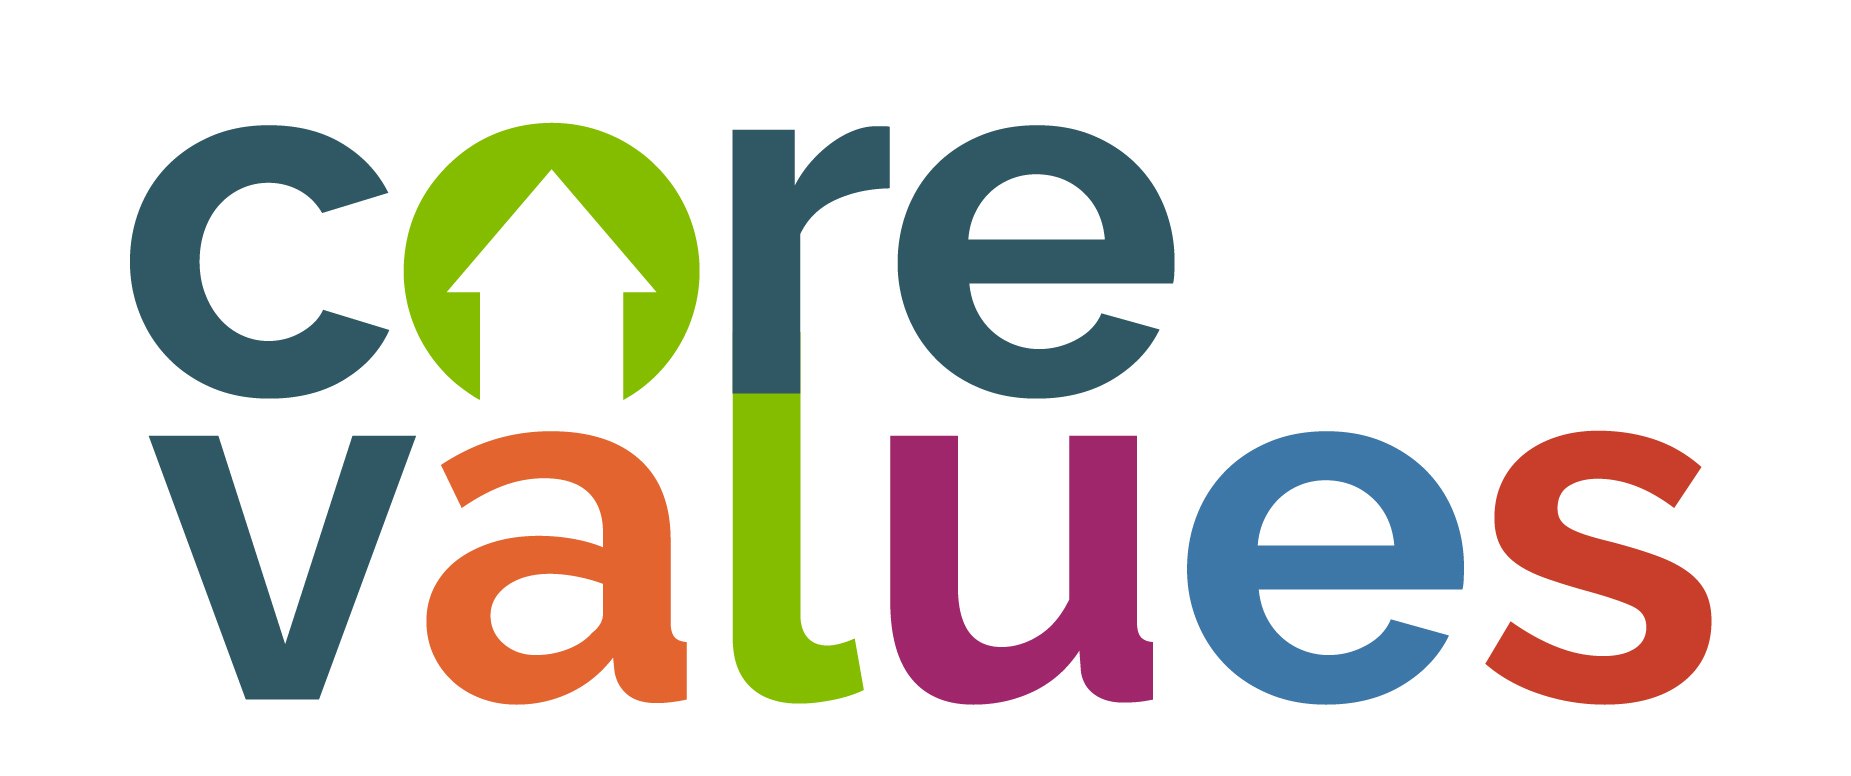 Core Values logo